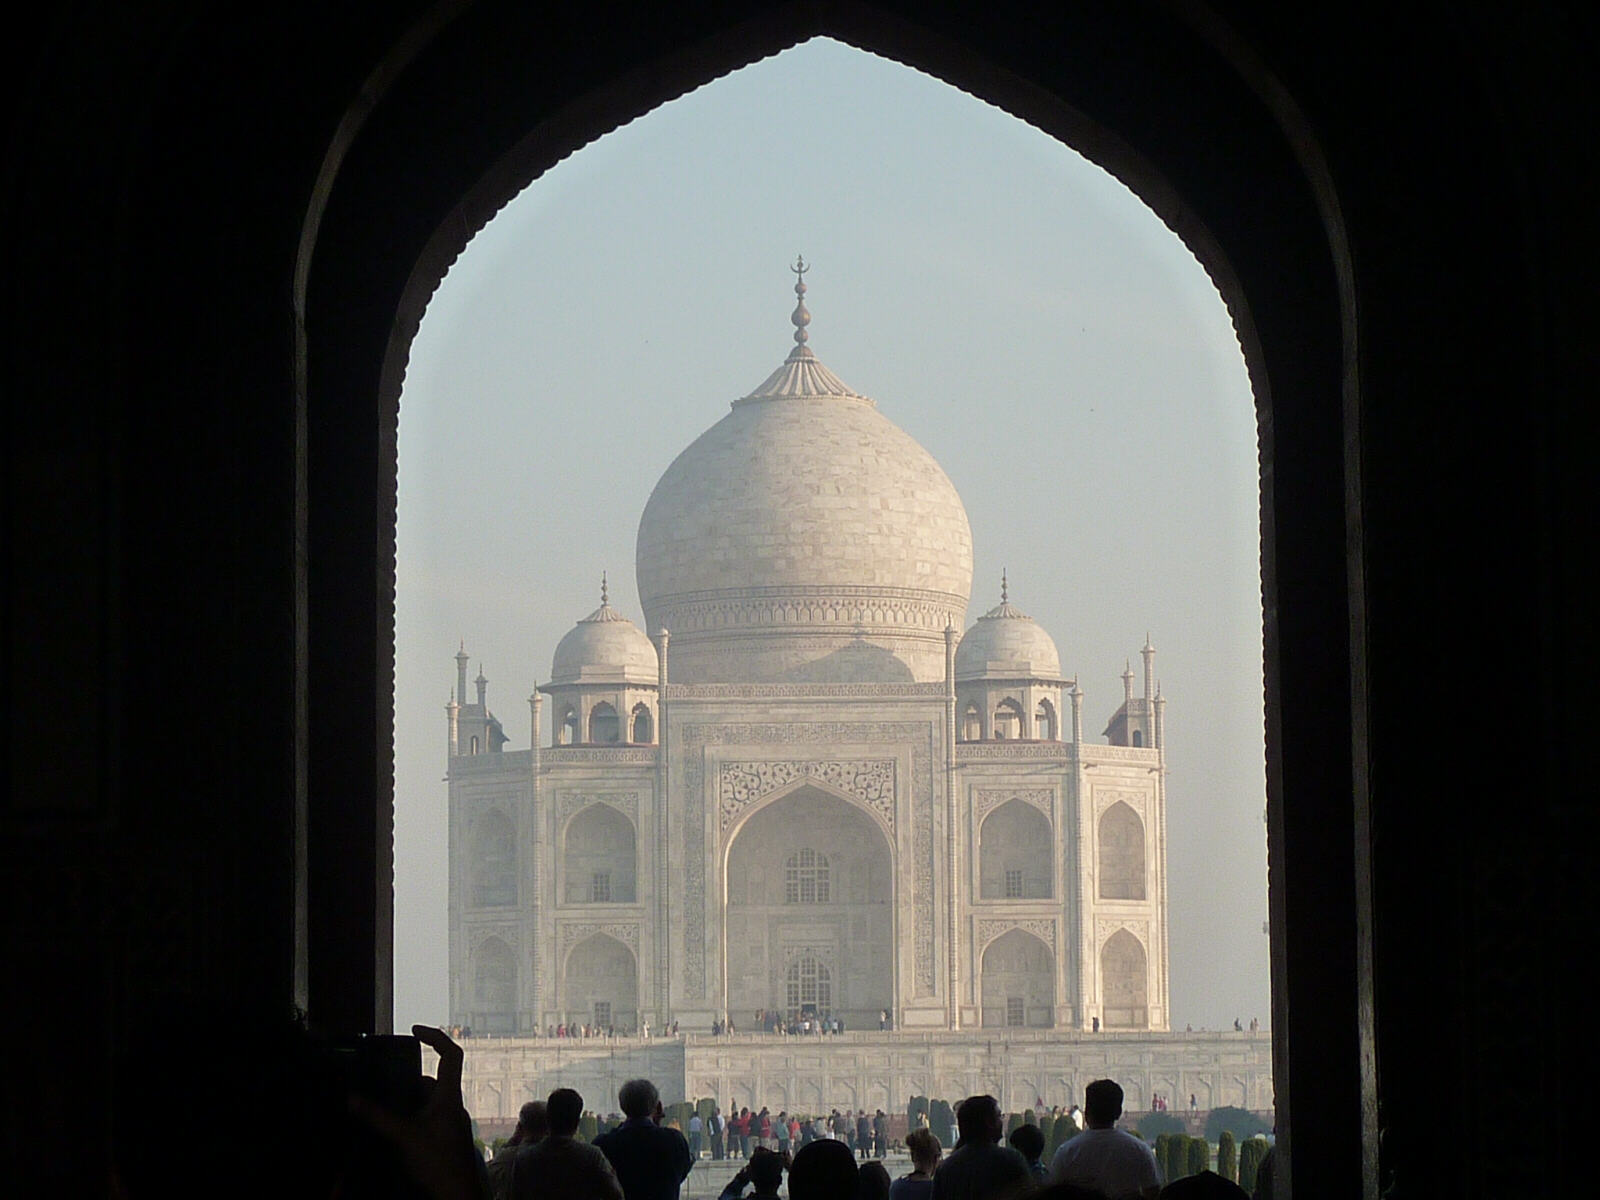 The Taj Mahal through an entrance gateway